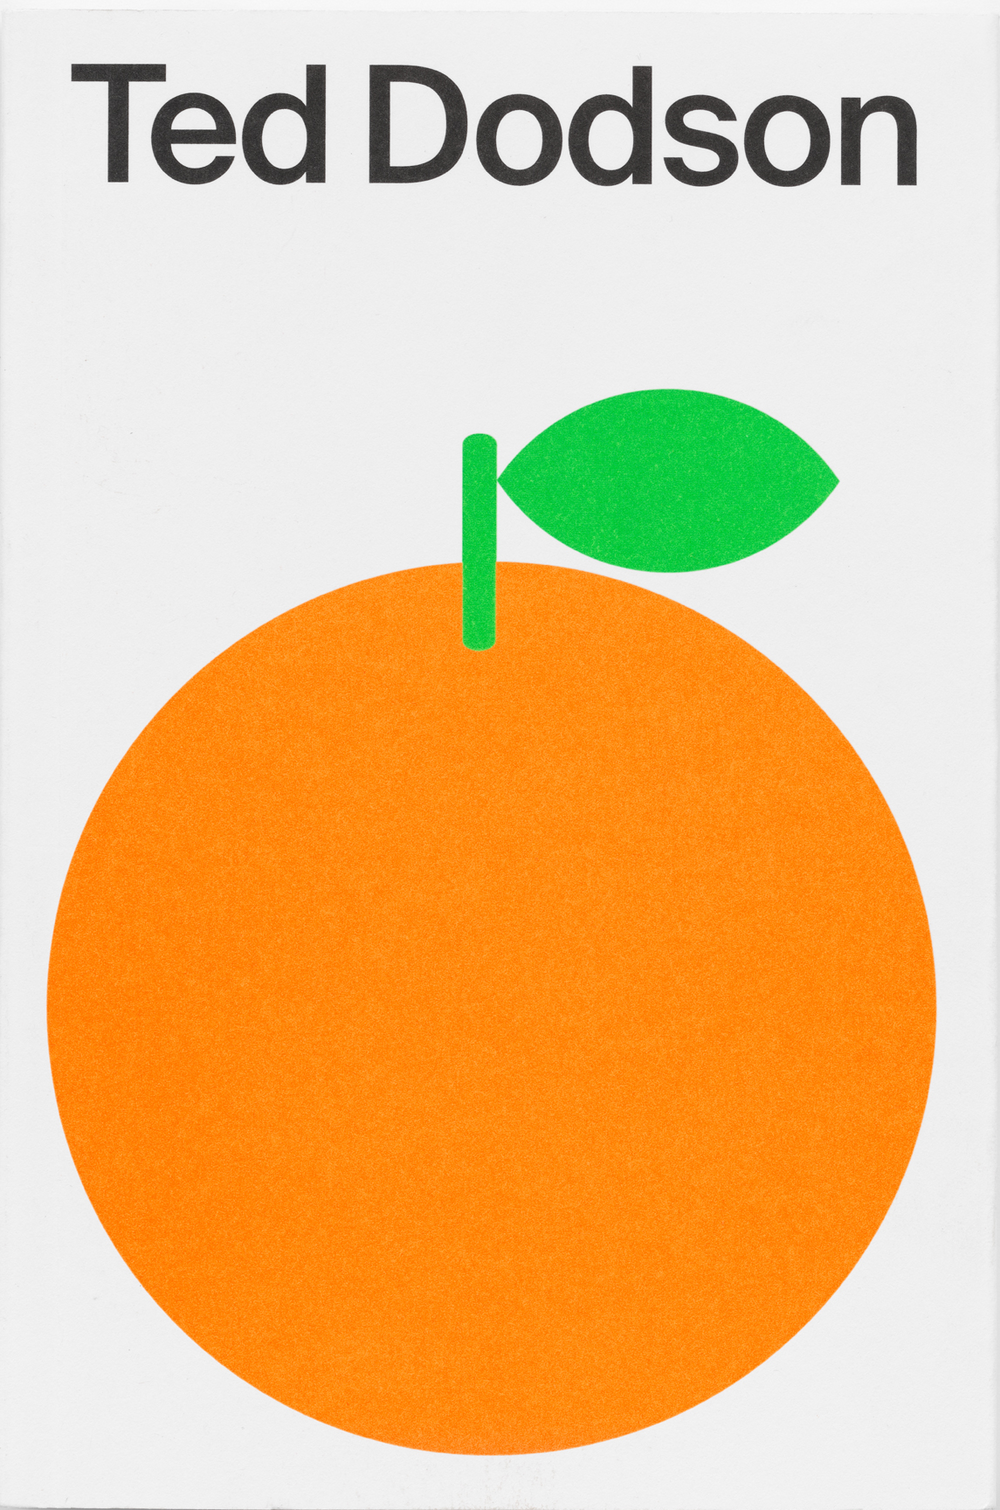 Ted Dodson: An Orange